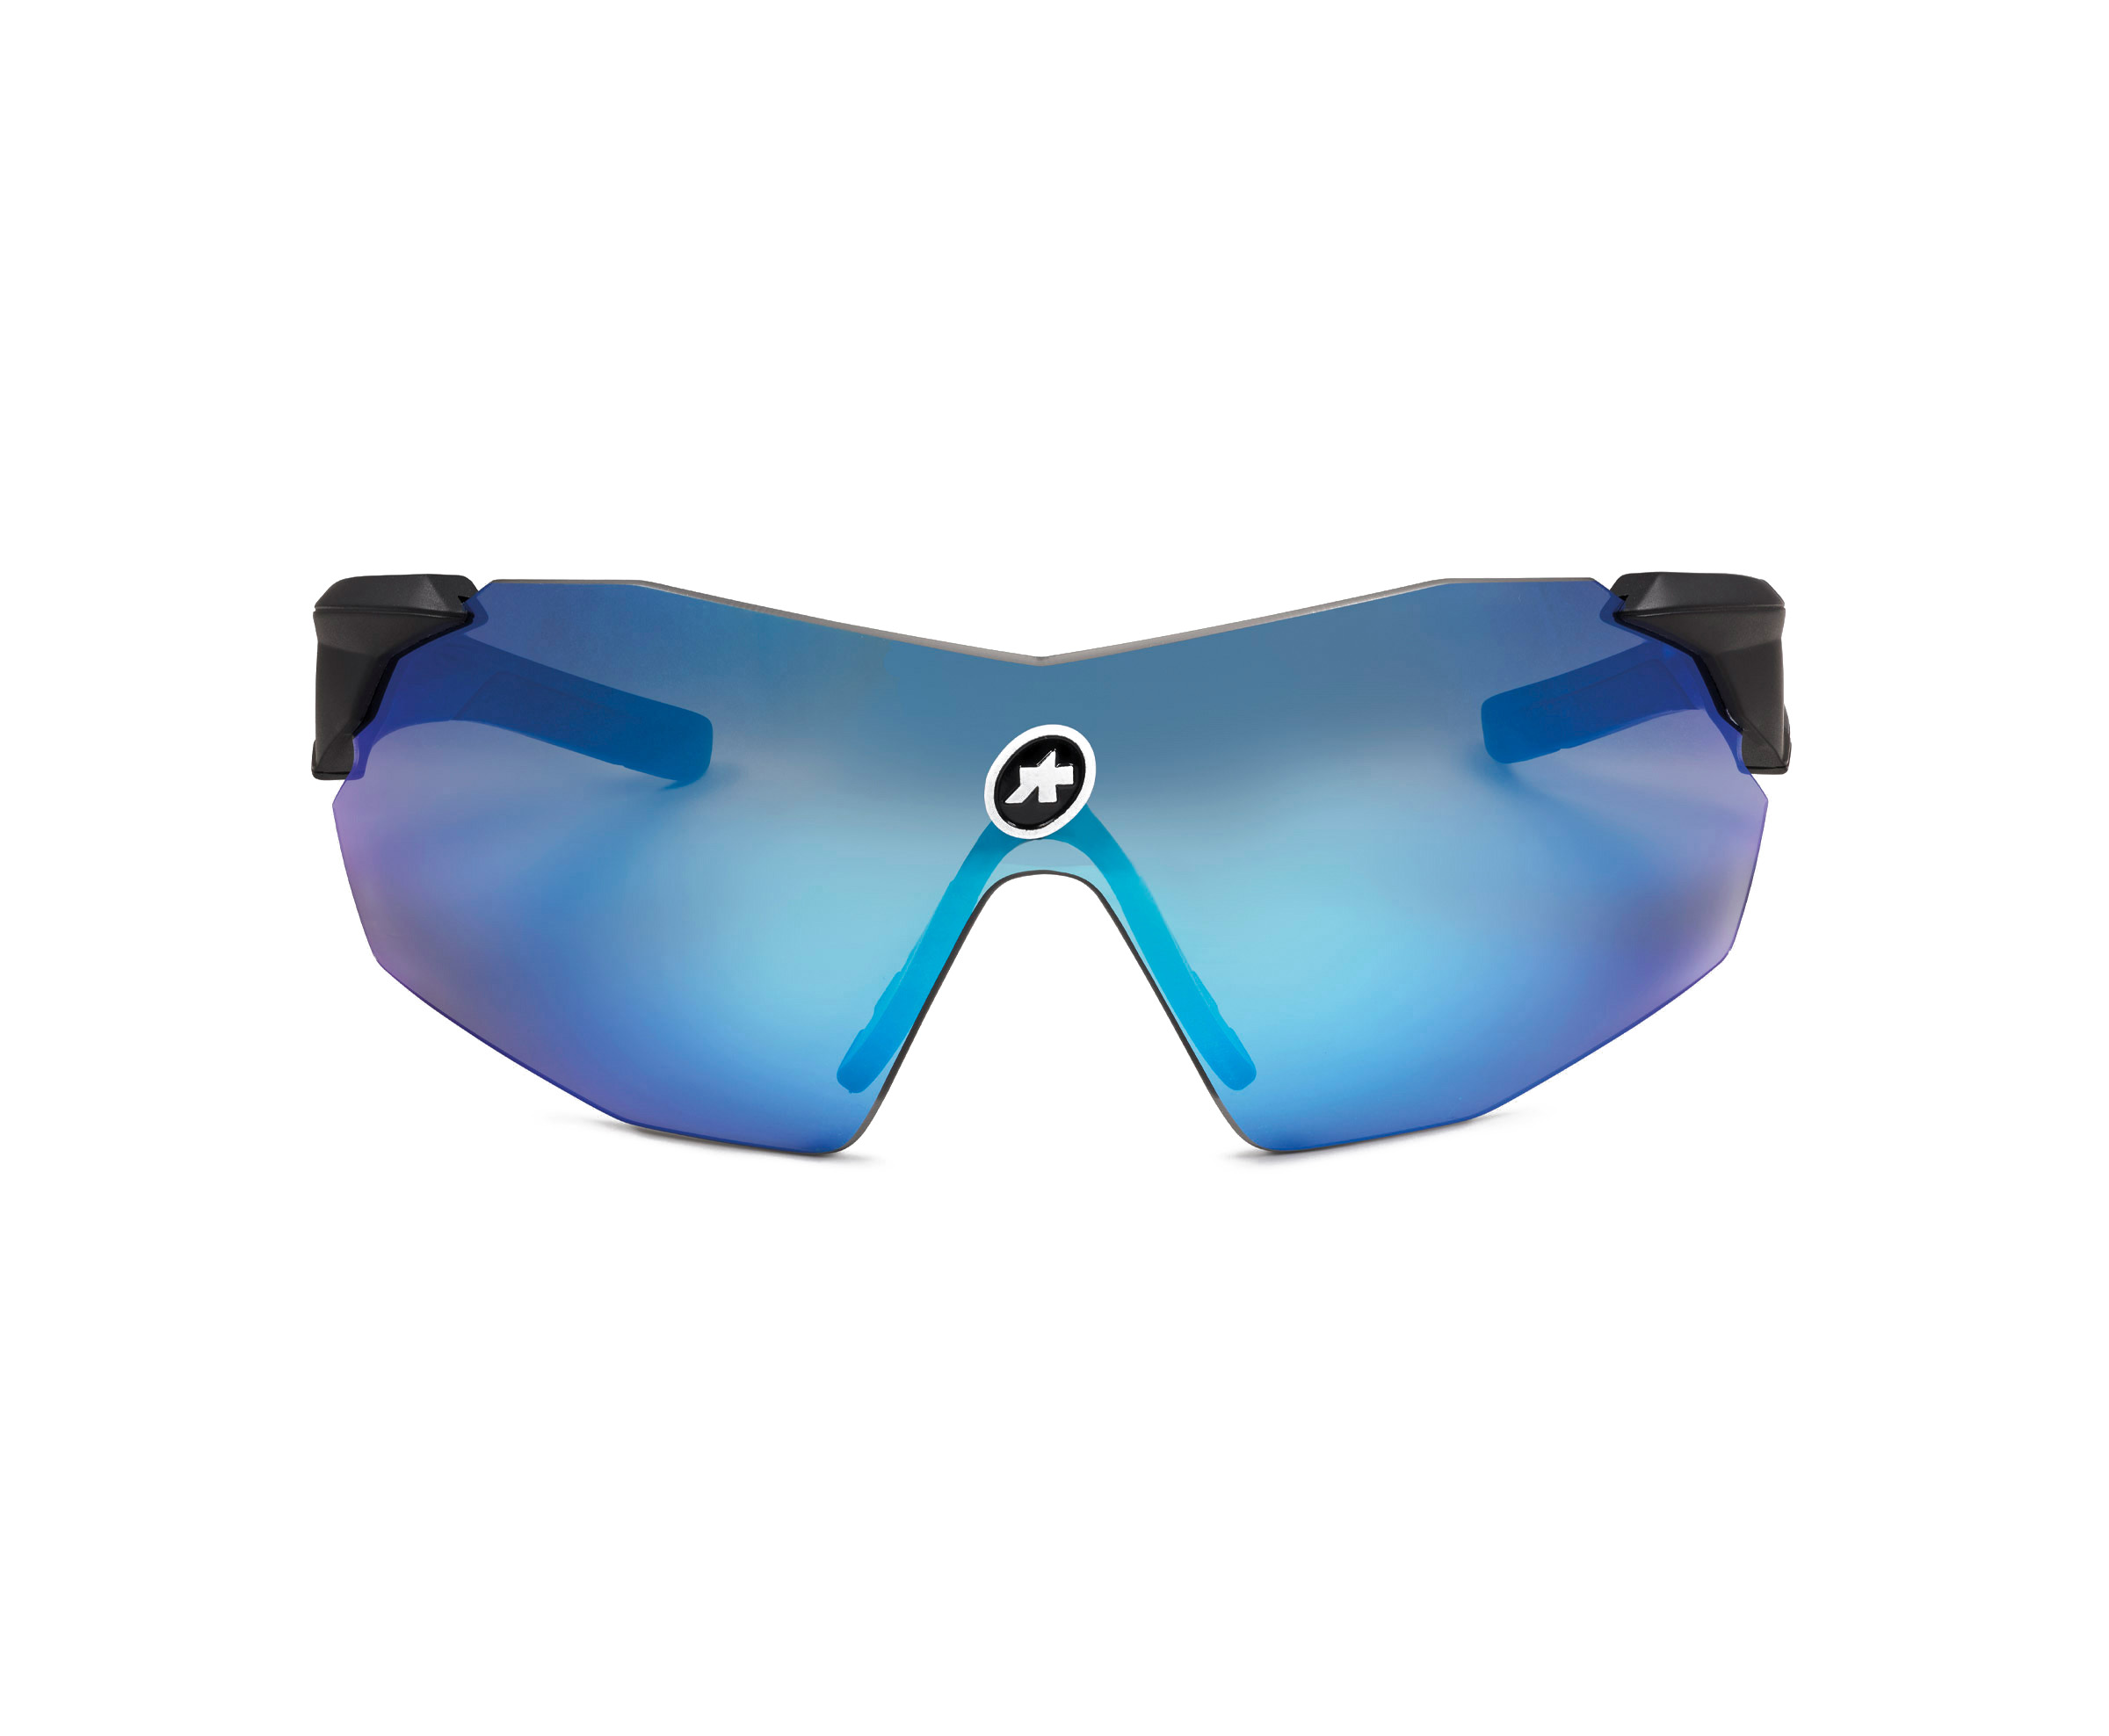 Окуляри ASSOS Eye Protection Skharab Neptune Blue, чорні, синя лінза фото 